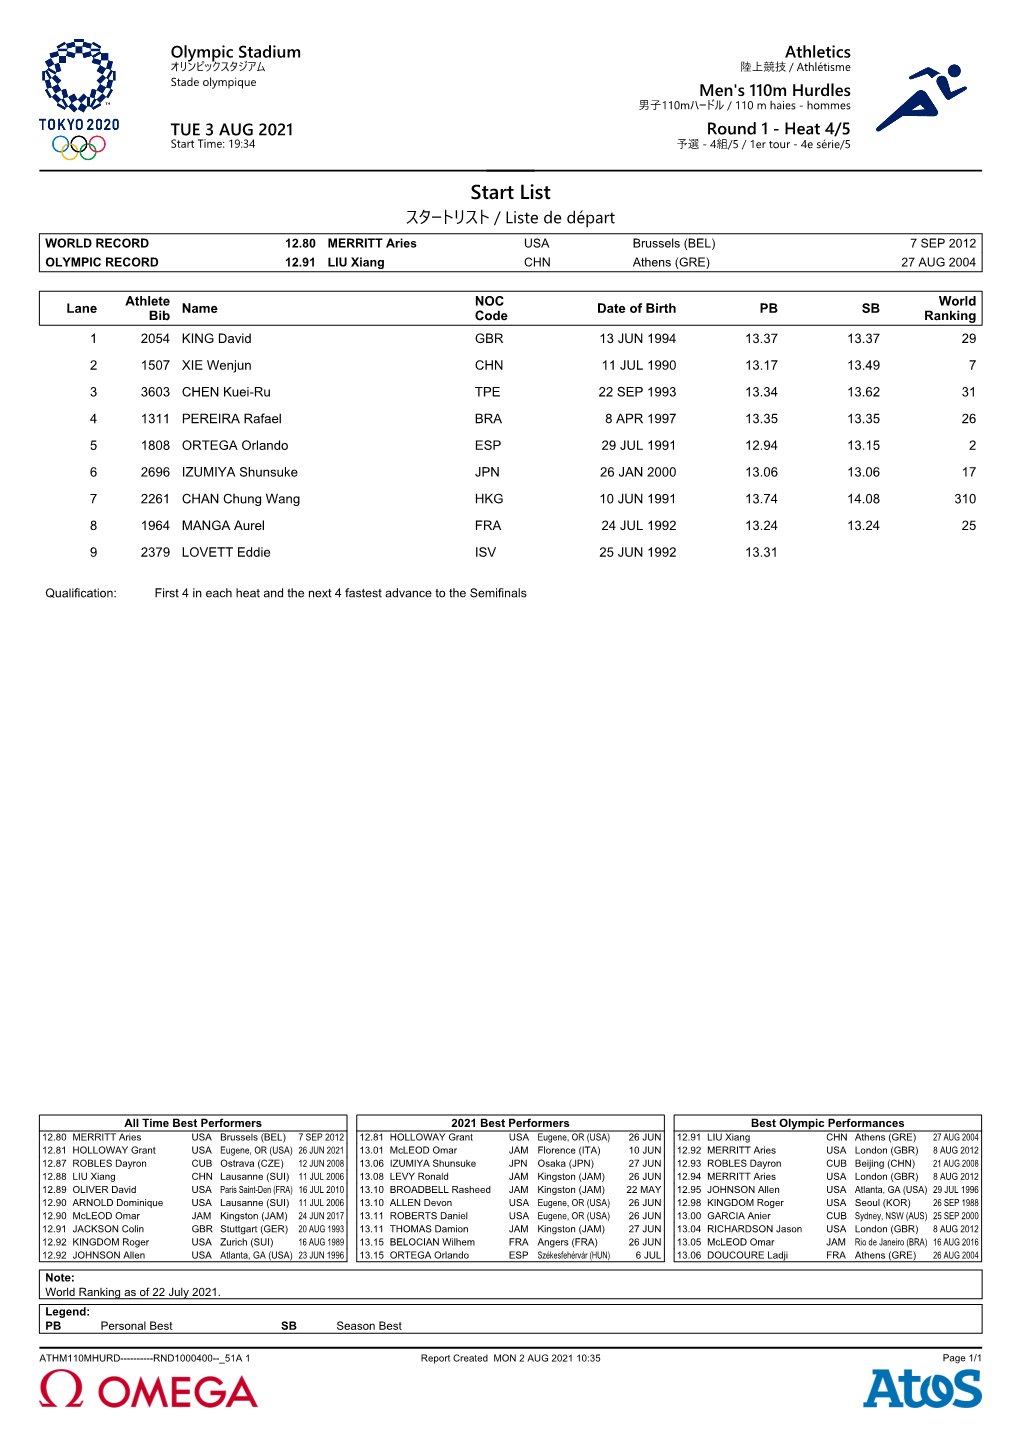 List スタートリスト / Liste De Départ WORLD RECORD 12.80 MERRITT Aries USA Brussels (BEL) 7 SEP 2012 OLYMPIC RECORD 12.91 LIU Xiang CHN Athens (GRE) 27 AUG 2004